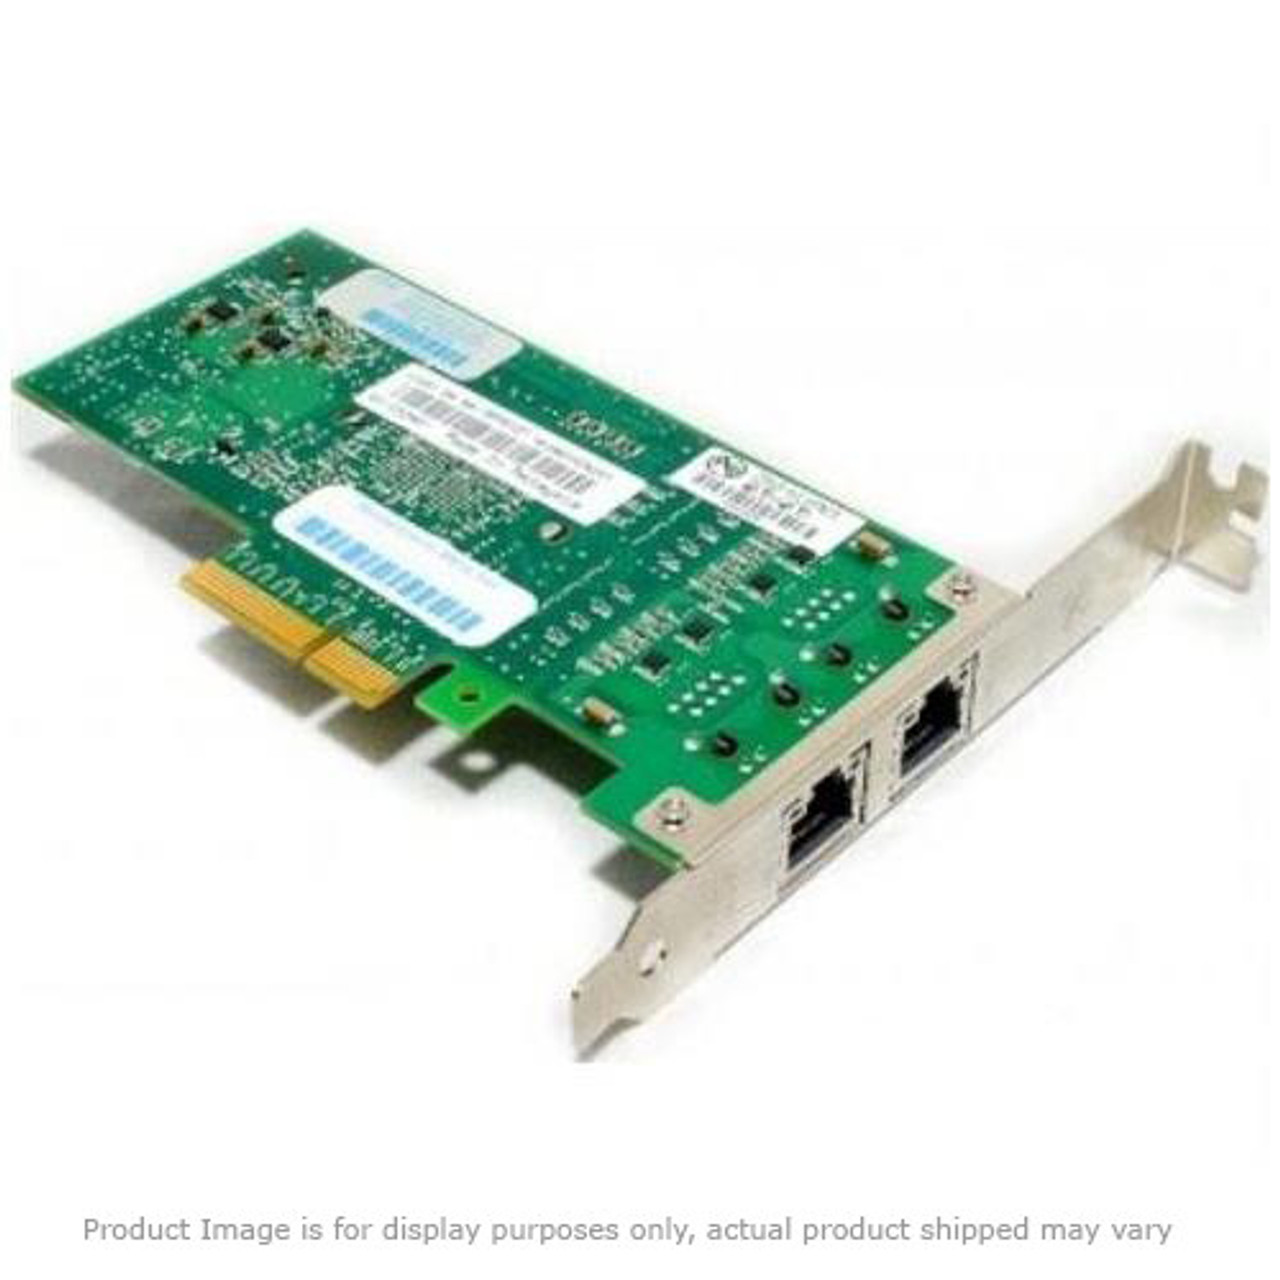 719228-003 Intel PRO/1000 PCI Fibre Channel Network Adapter